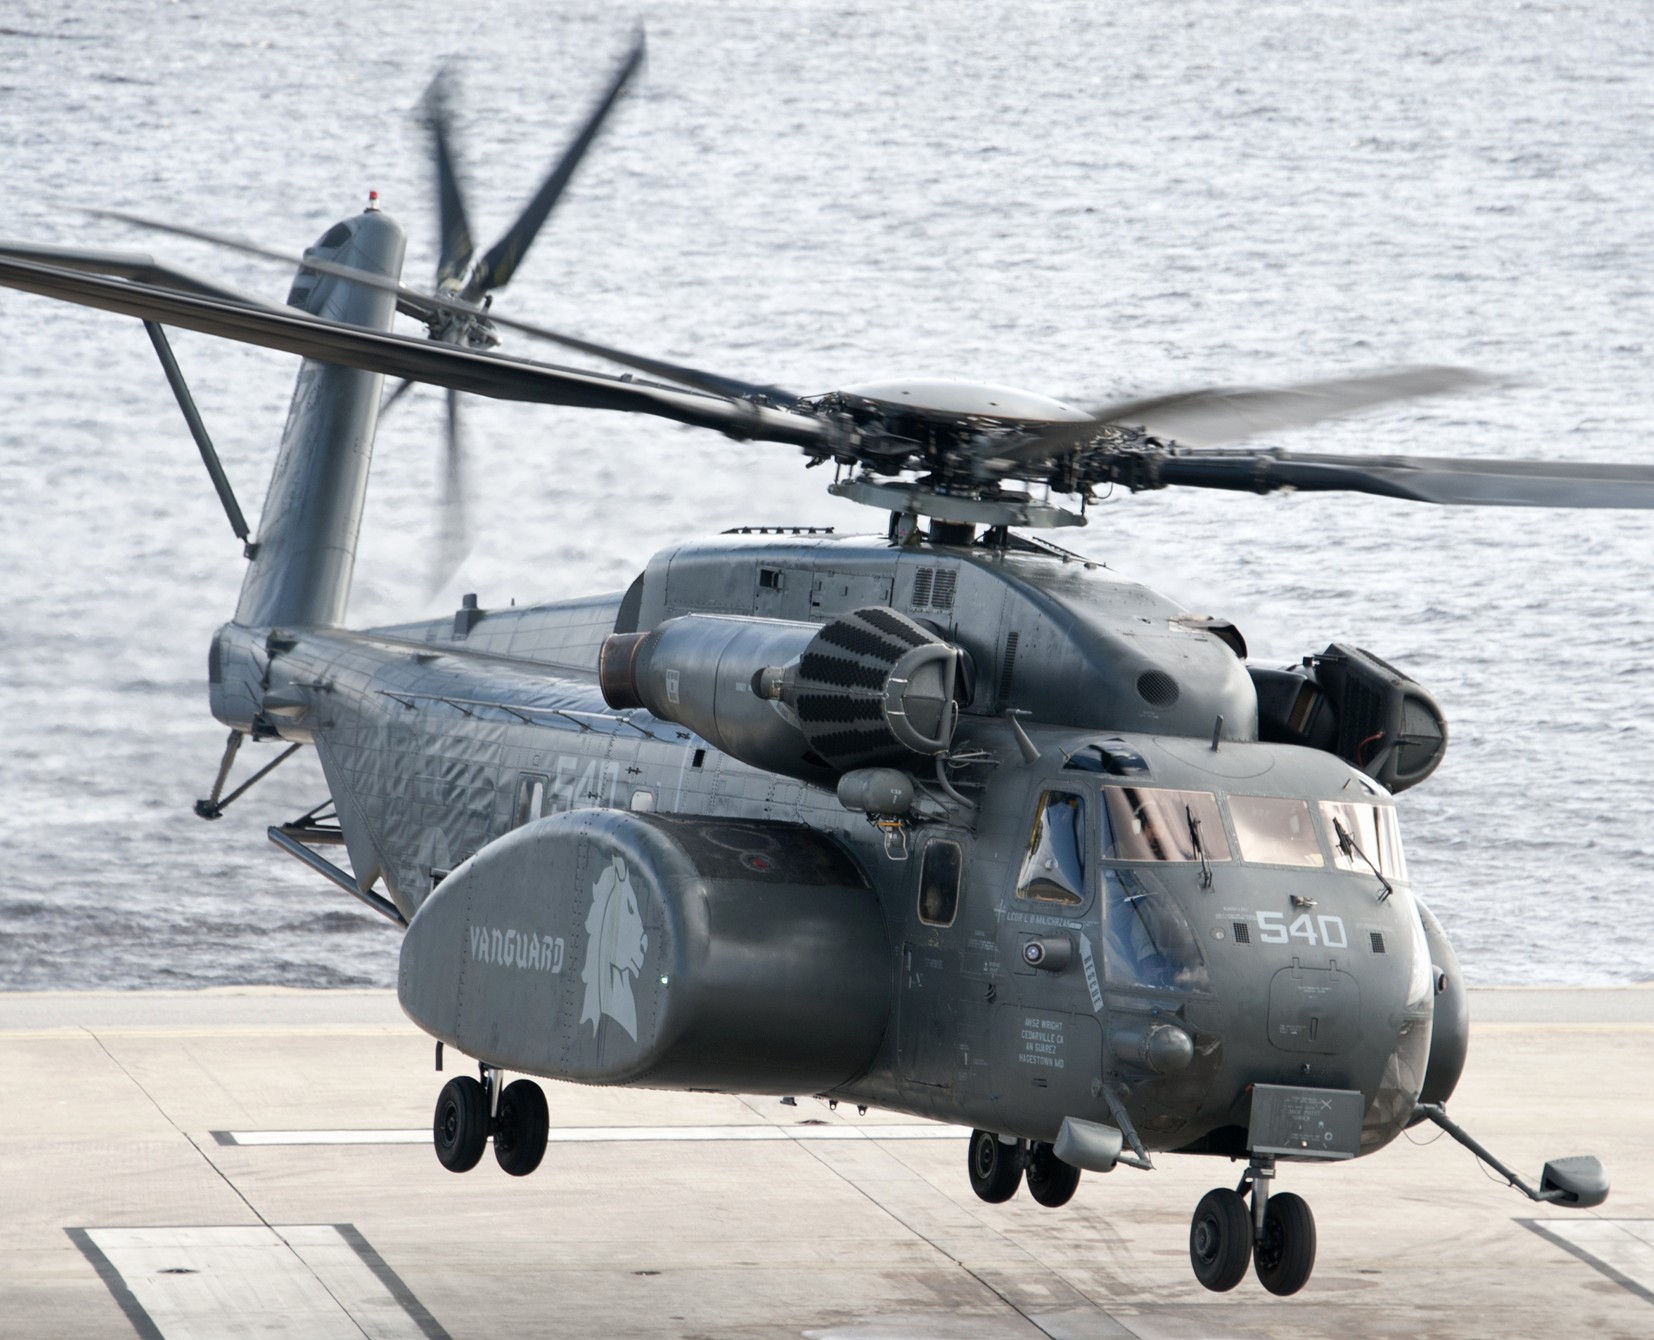 hm-14 vanguard helicopter mine countermeasures squadron navy mh-53e sea dragon 143